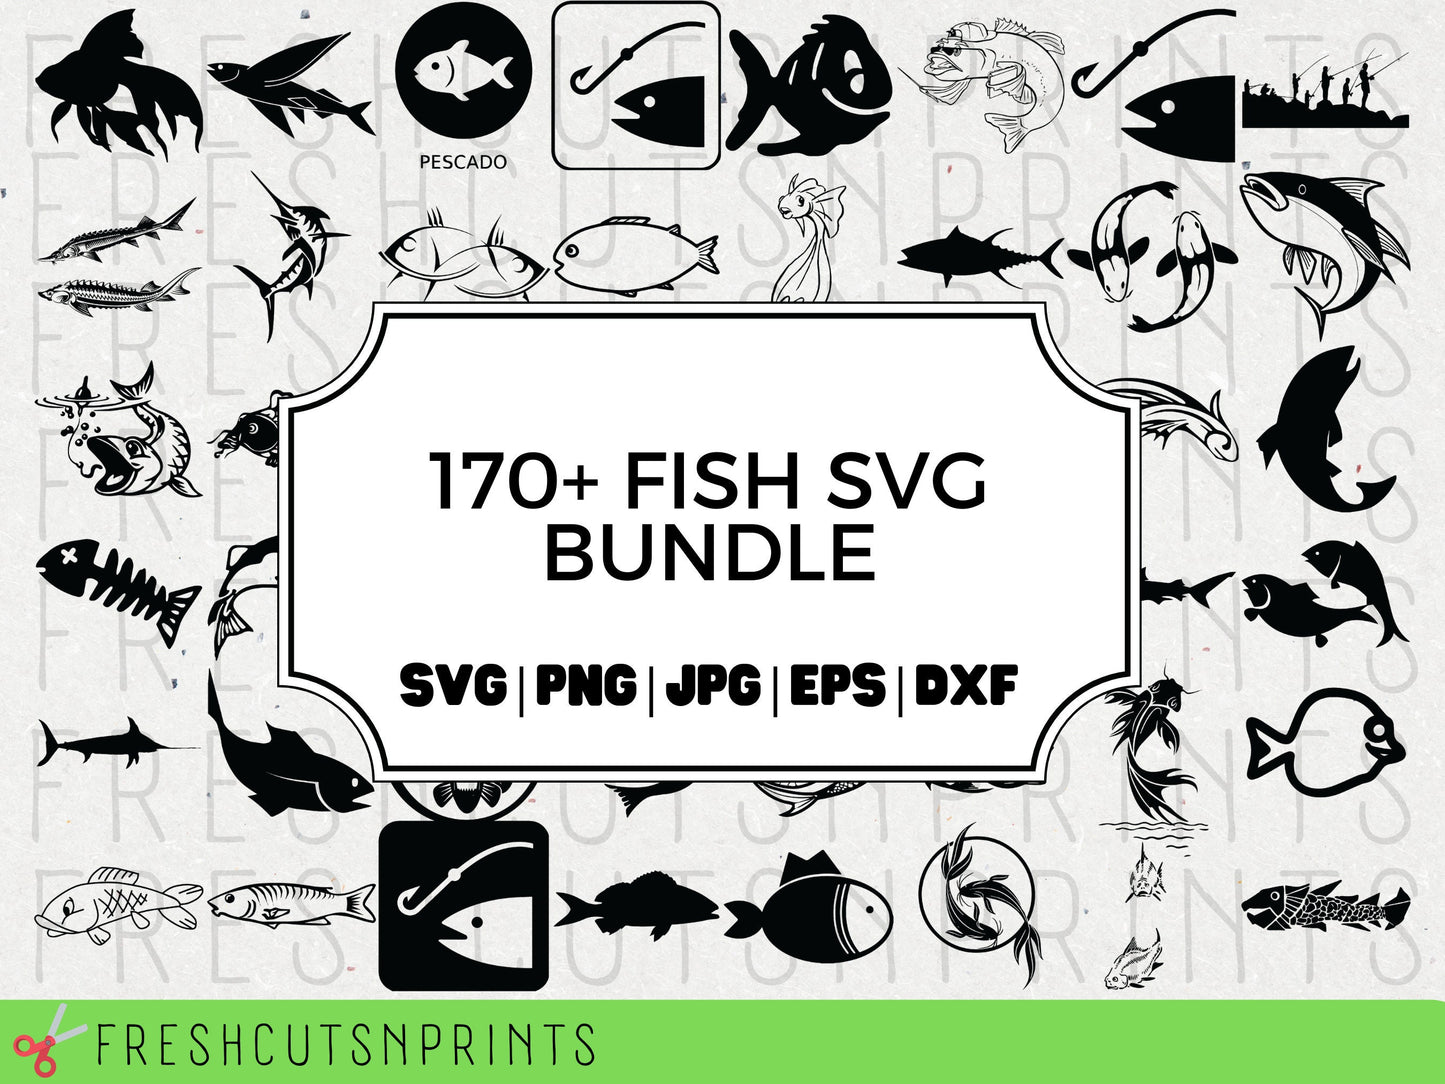 170+ Fish SVG Bundle , Fish Clipart, Fish Cut File, Fish Vector, Fish Decal, Tribal Fish, Fish Silhouette, Fishing svg, Fishing Design